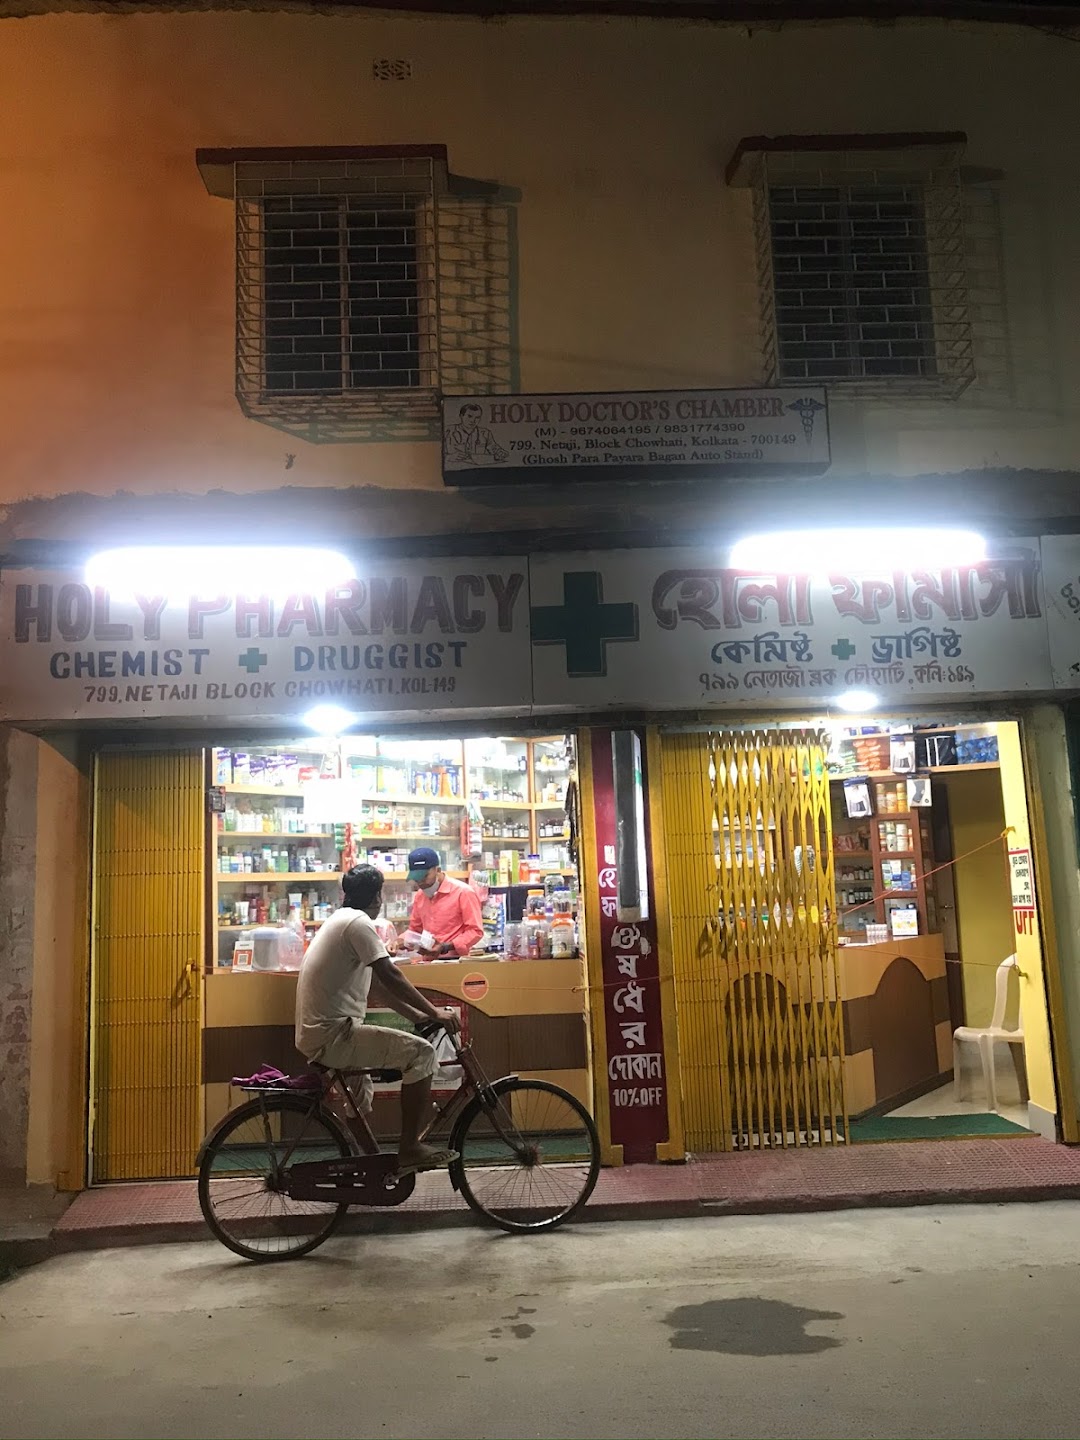 Holy Pharmacy